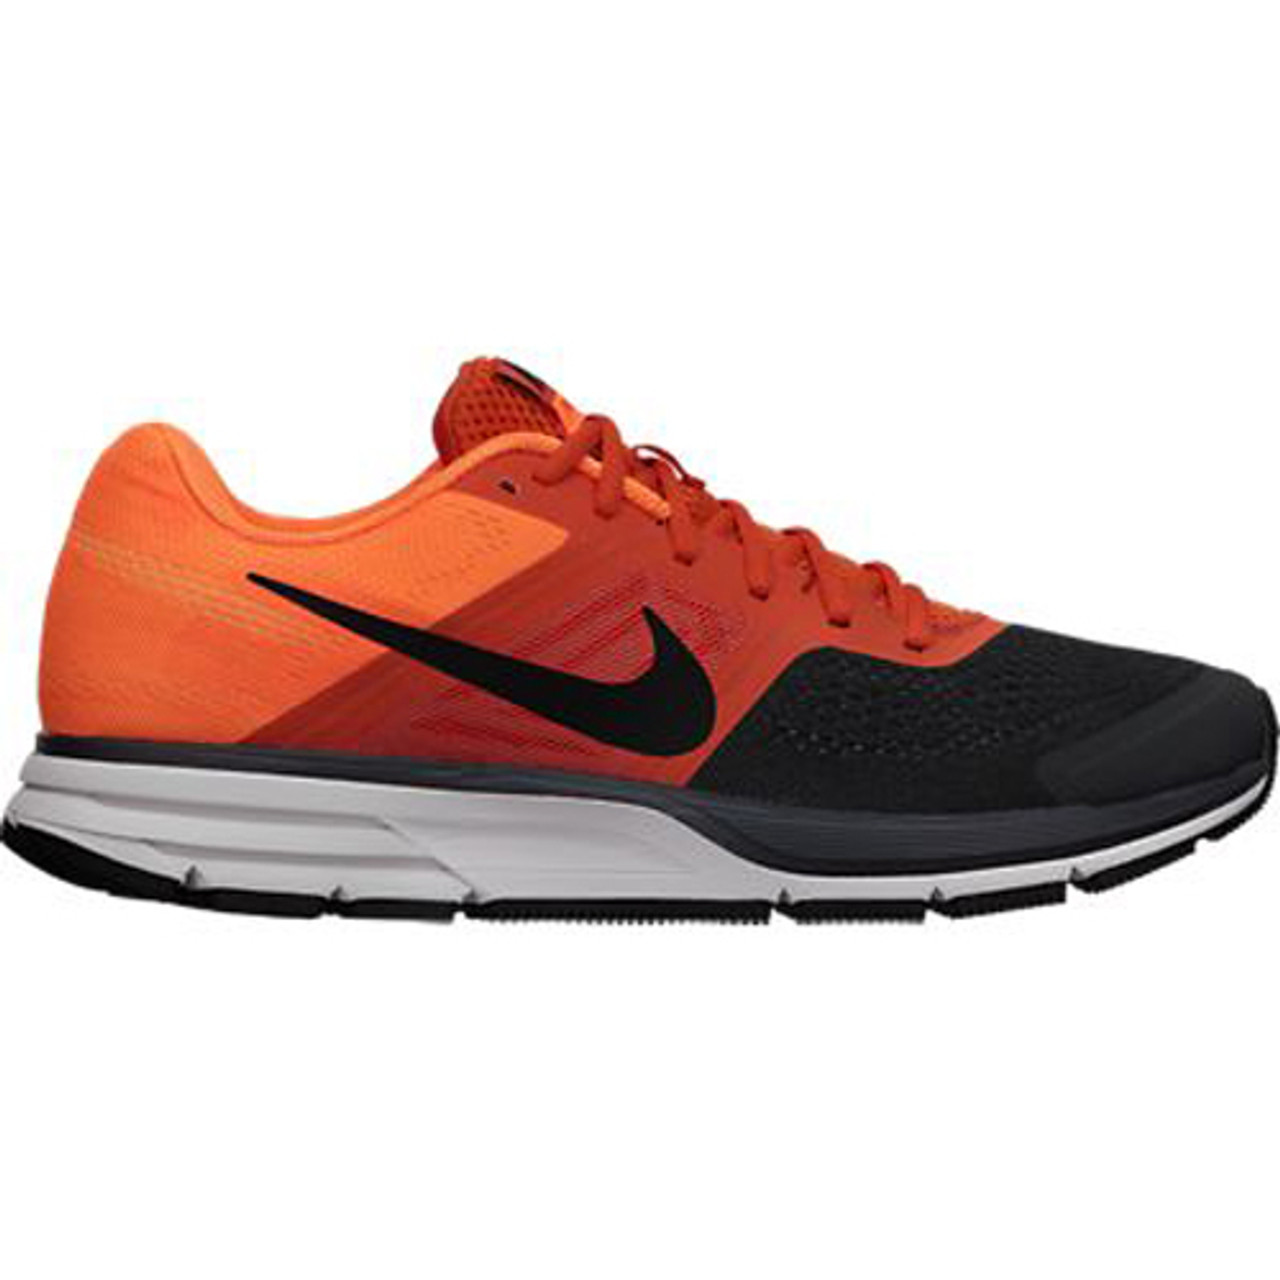 New Nike Air Pegasus +30 Orange/Black Mens Running Shoes - Orange/Anthracite/Total Orange/Black | Discount Nike Athletic & More - Shoolu.com | Shoolu.com